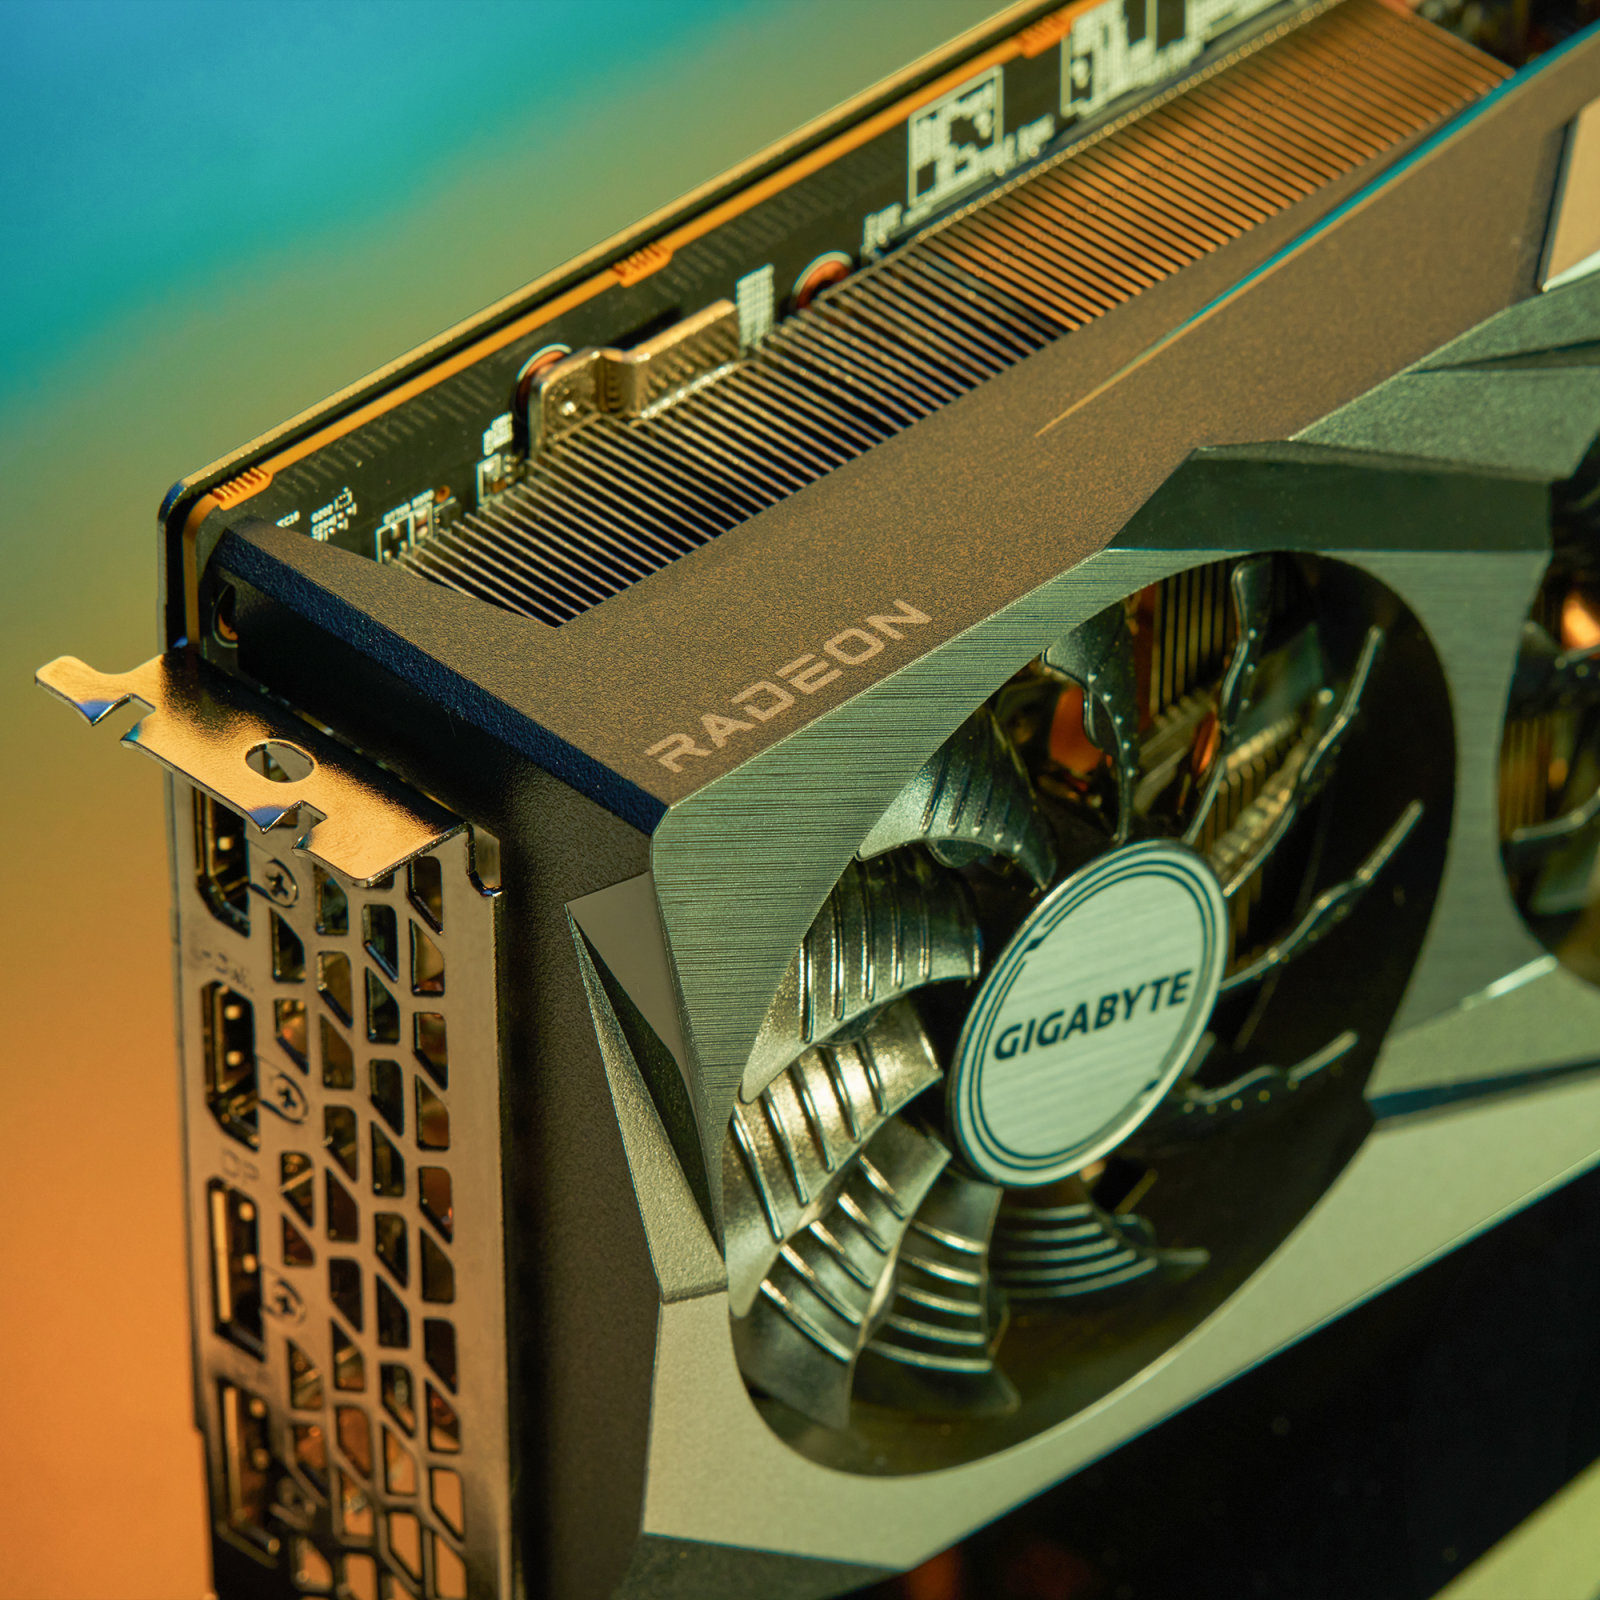 AORUS - 📣Coming Soon! 🤩🤩AORUS Radeon™ RX 6800 XT MASTER